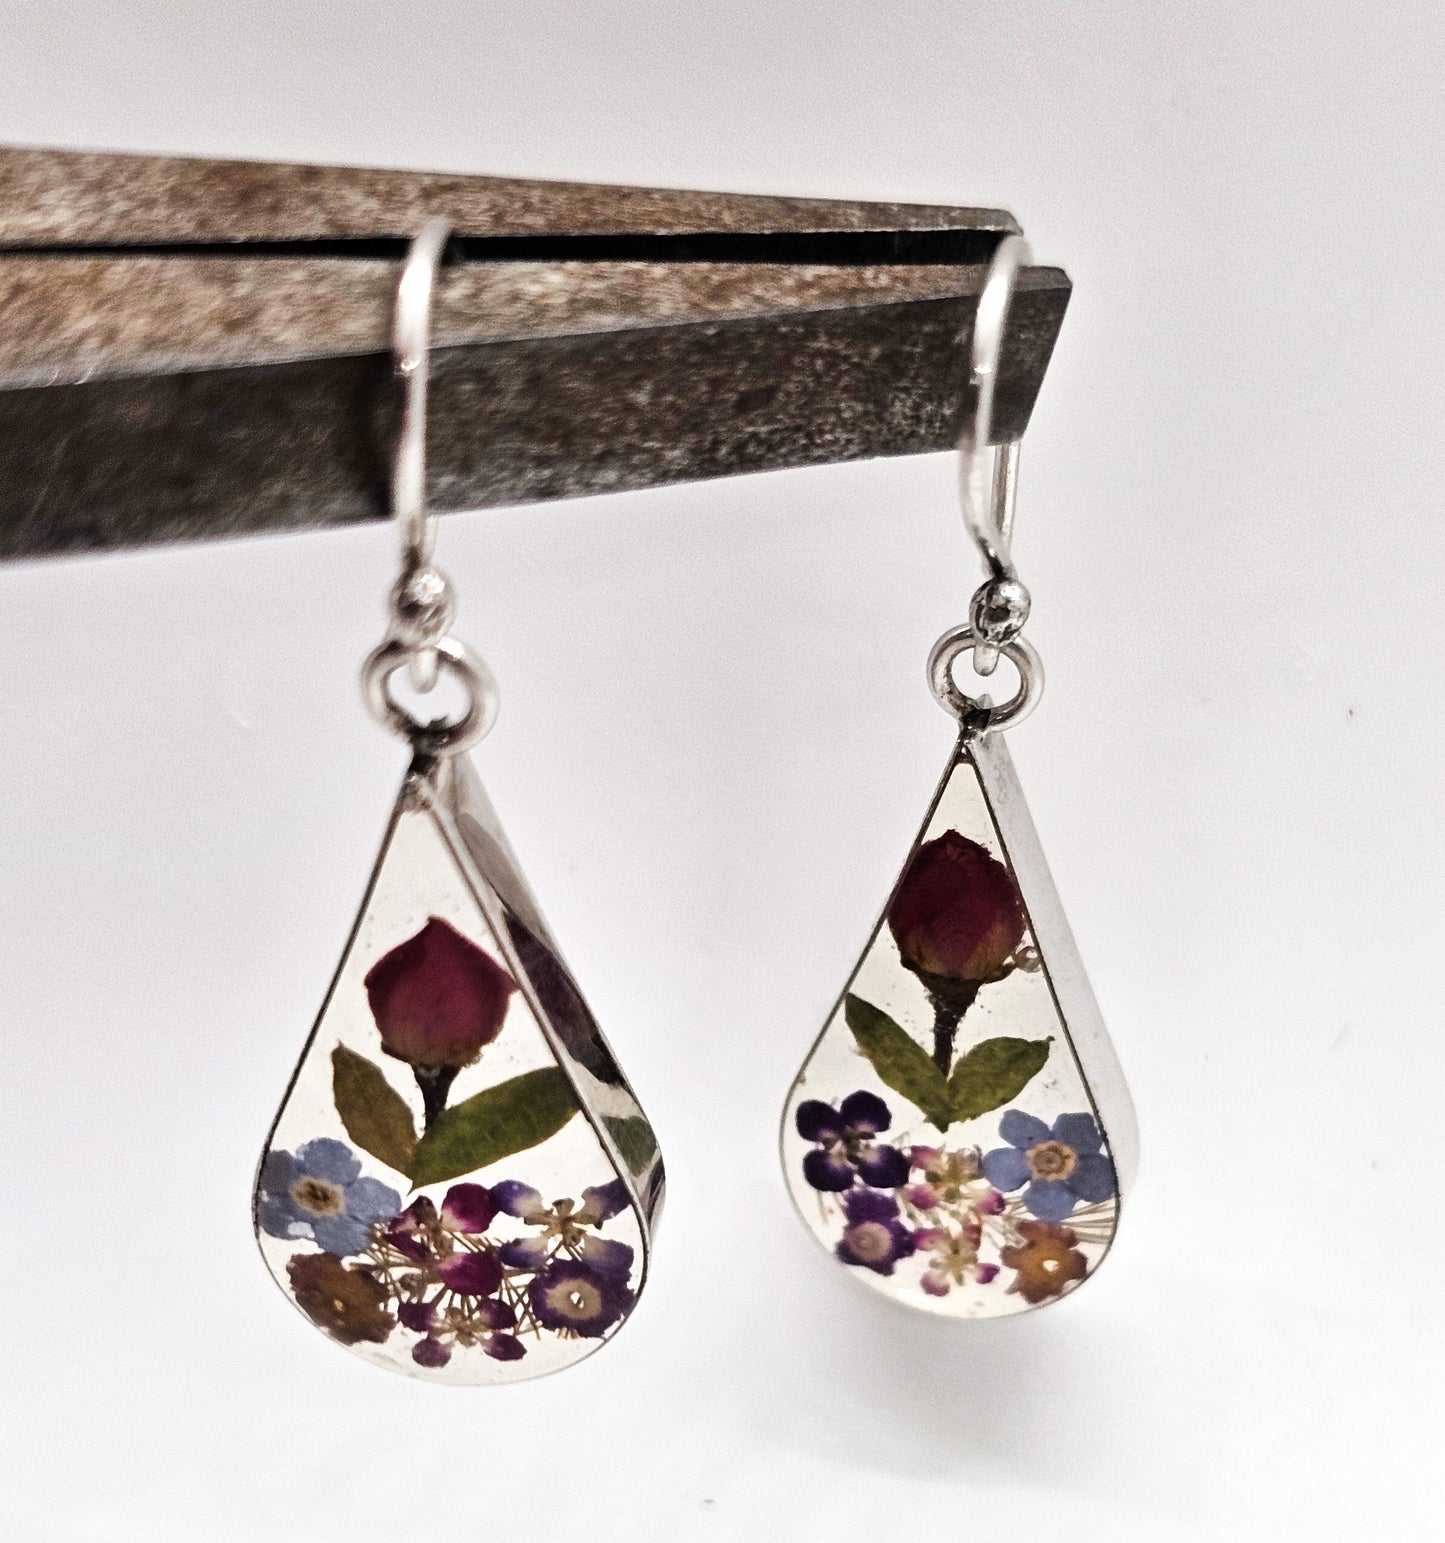 Annika Witt Rose bud flower resin Mexican sterling silver drop earrings ATI